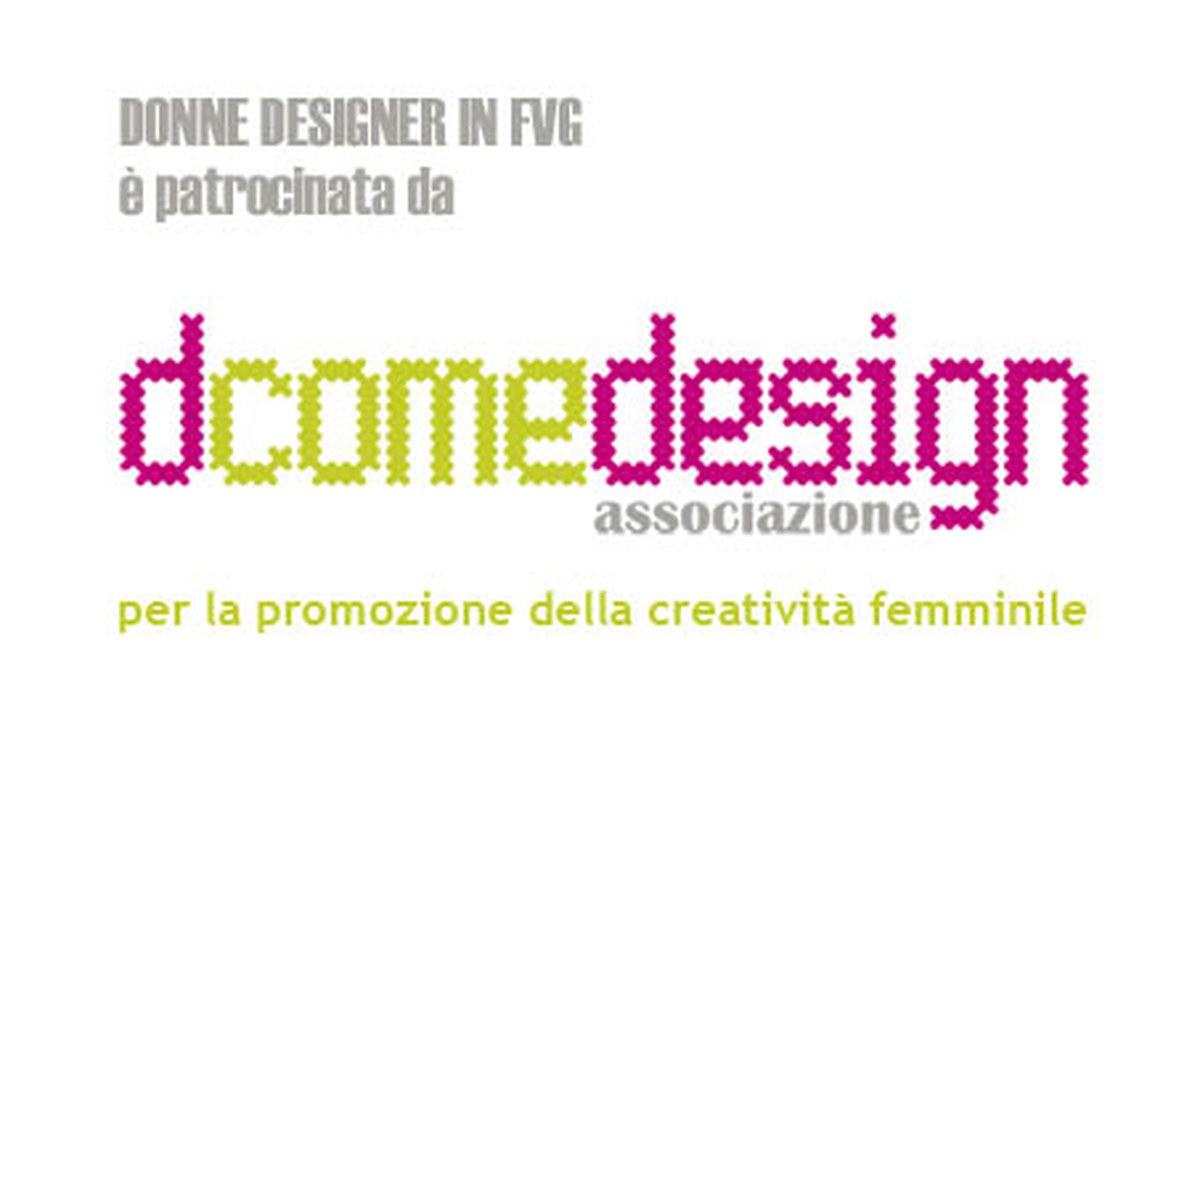 Donne Designer, Friuli Venezia Giulia, Mudefri, Museo, Design